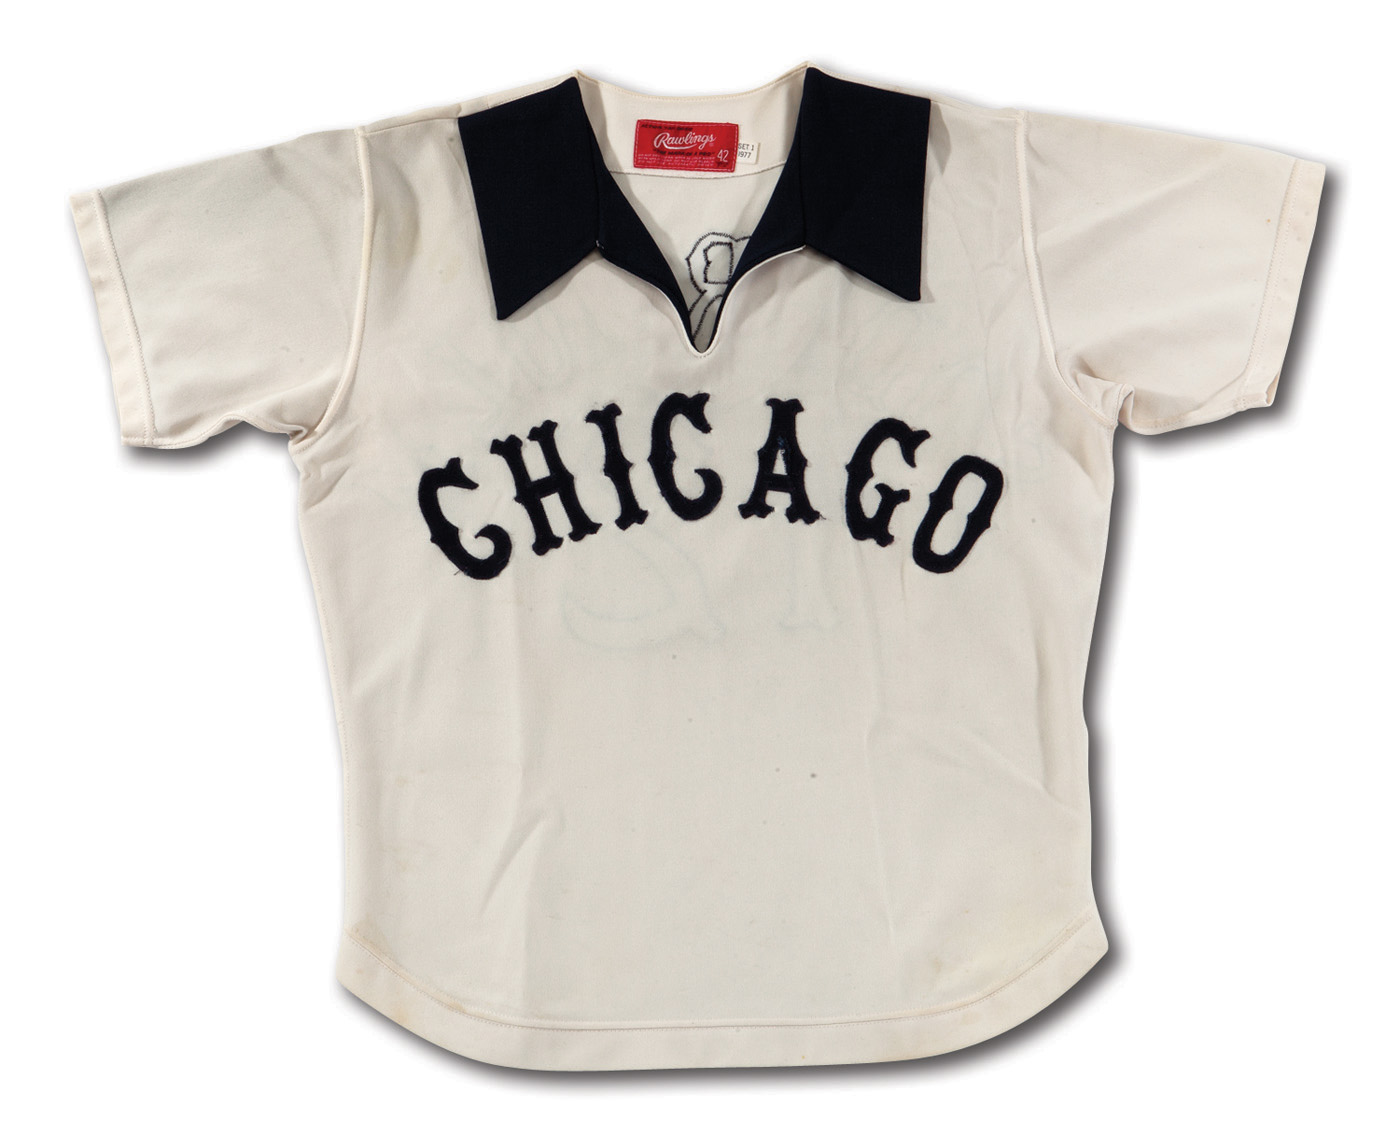 white sox 1977 jersey